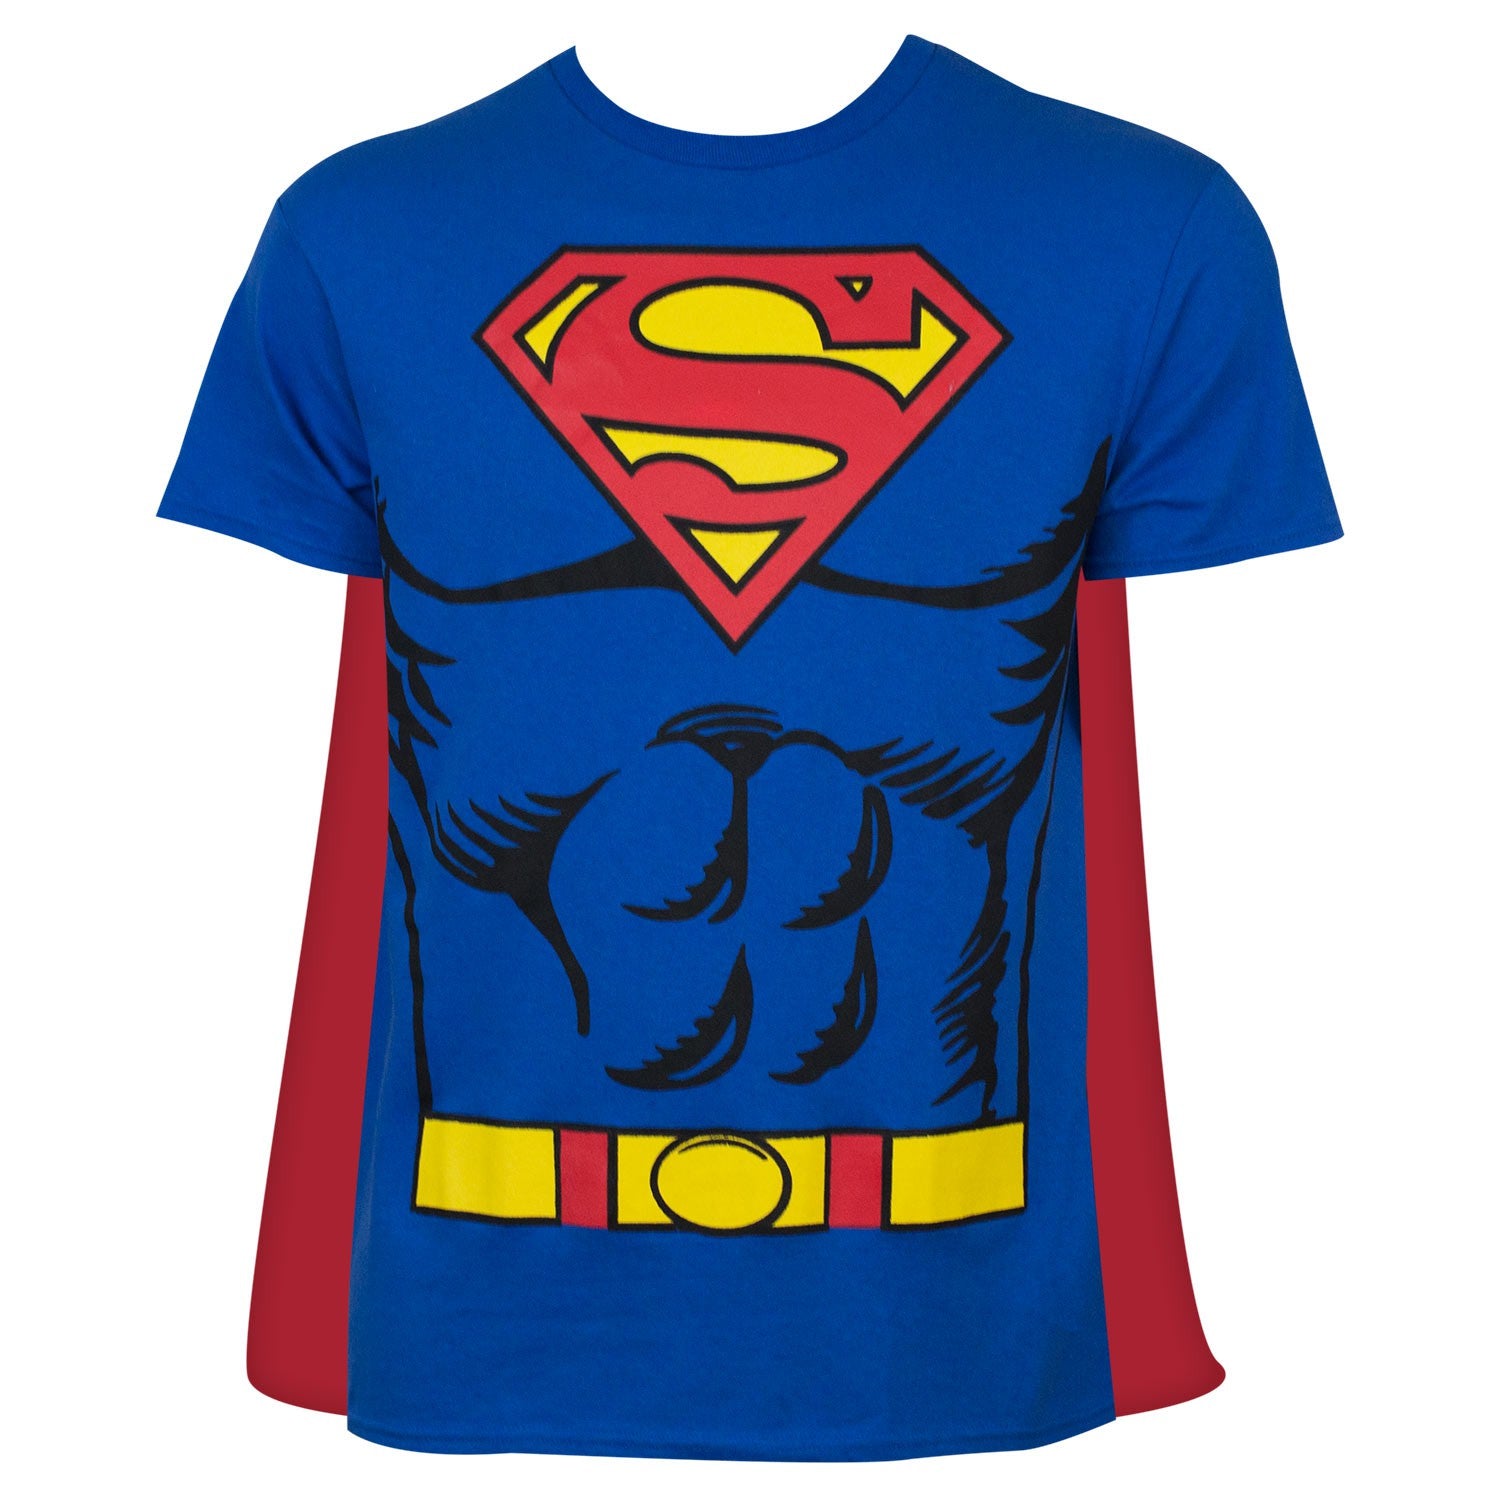 Superman Cape Costume Tee Shirt